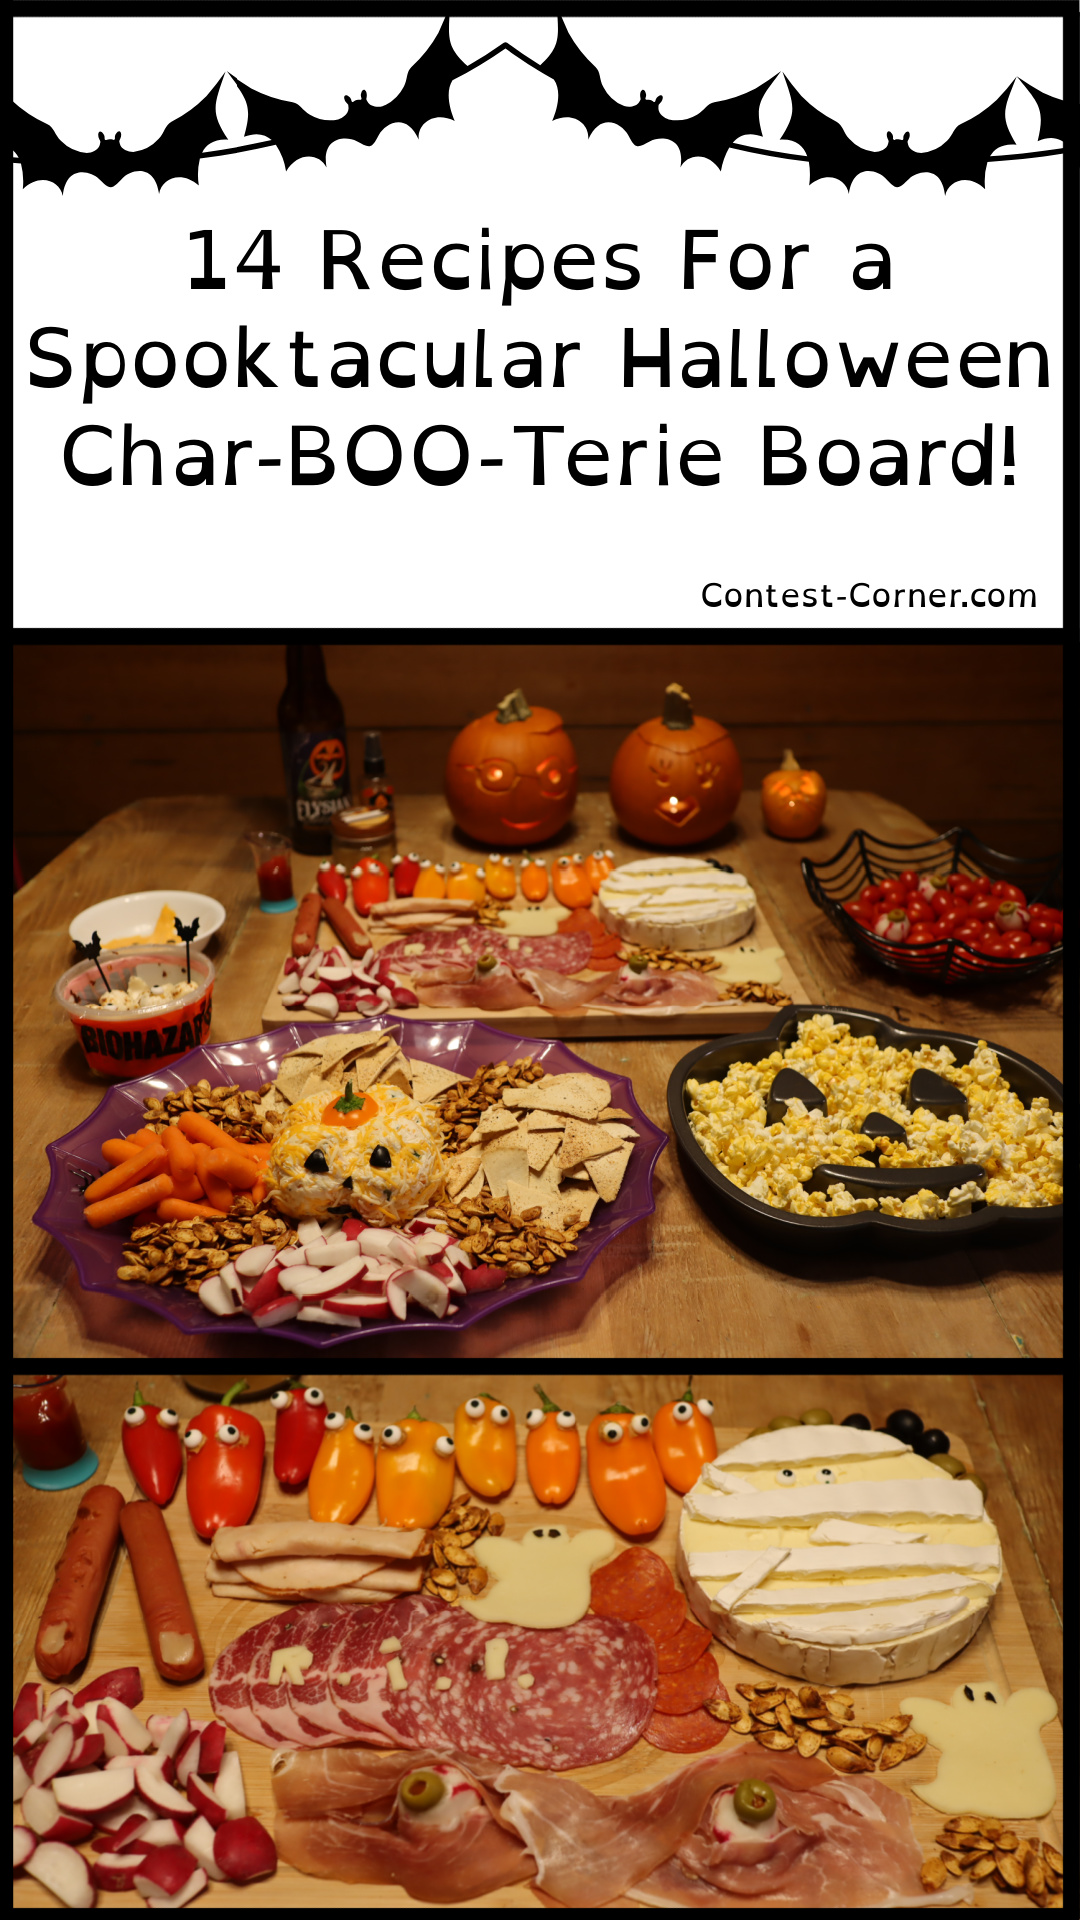 14 Recipes For a Spooktacular Halloween Char-BOO-Terie Board!